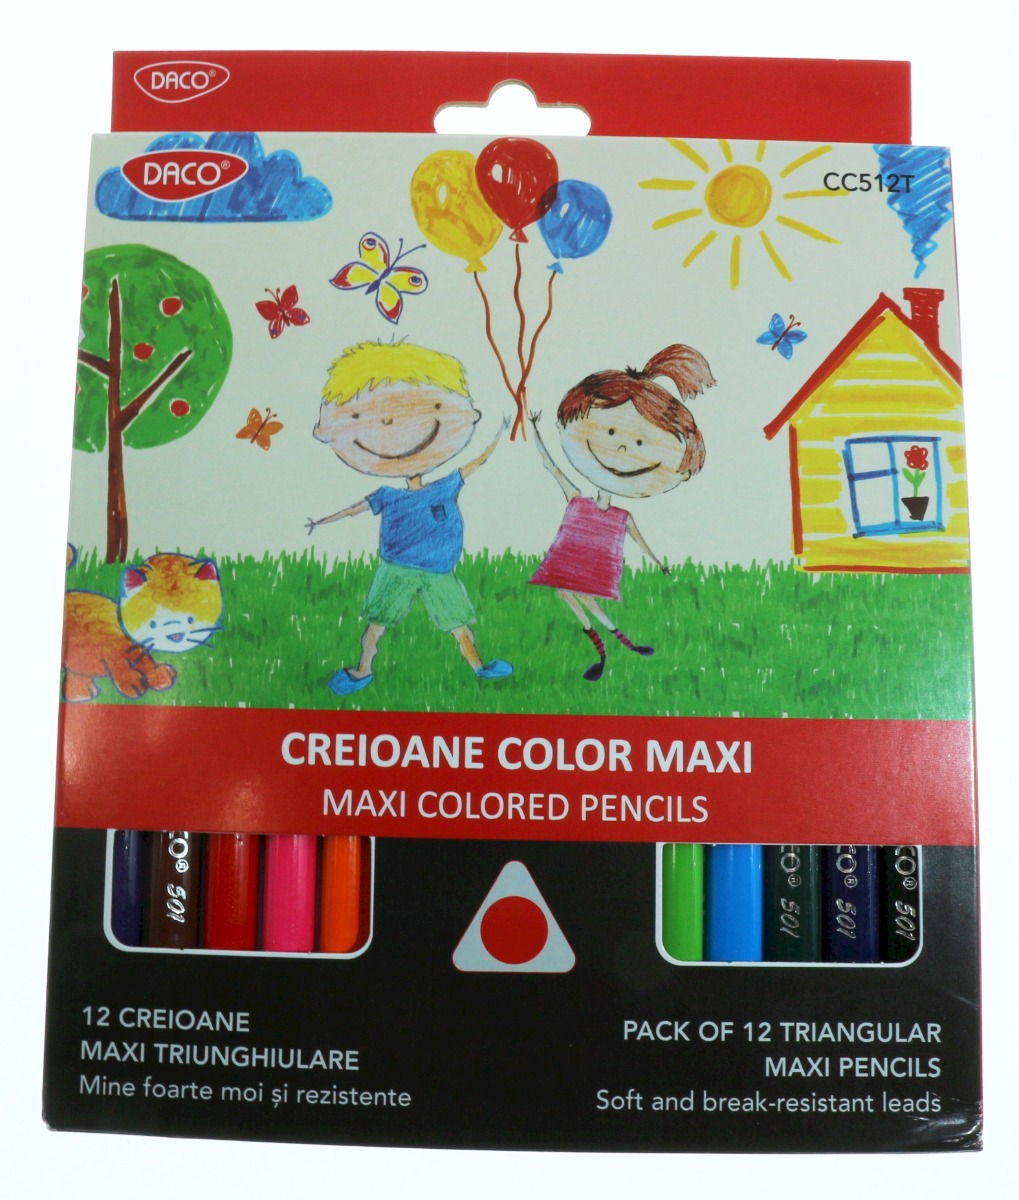 Creion color triunghiular maxi 12 set Daco CC512T